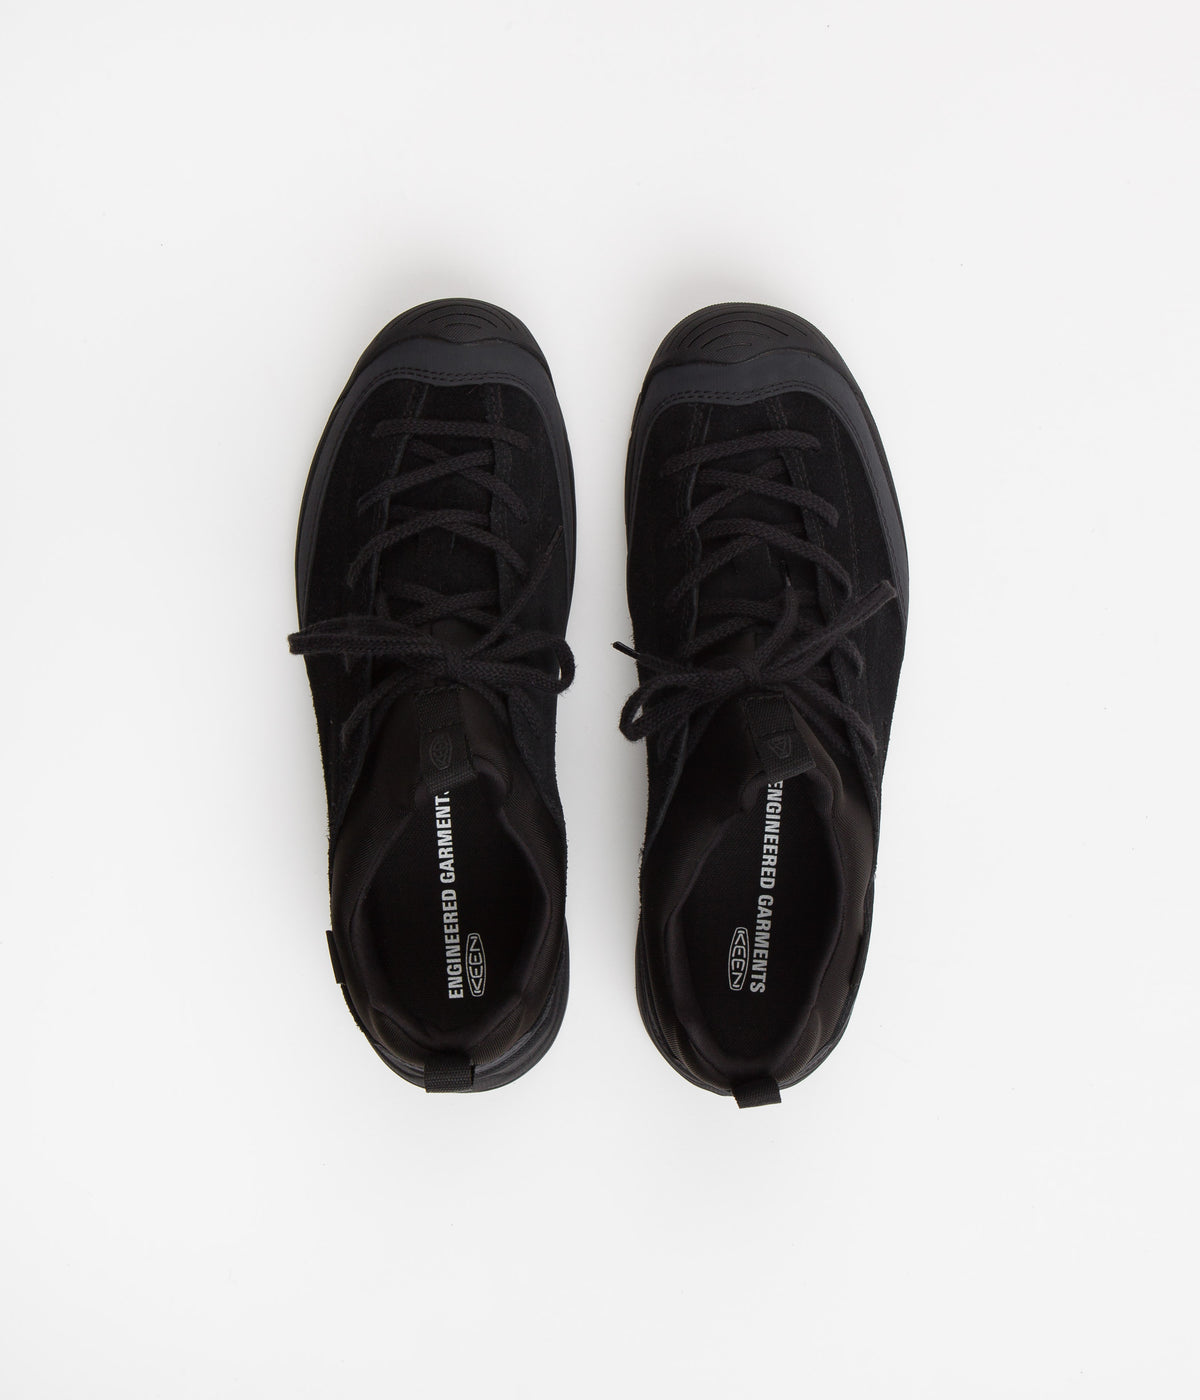 Keen Jasper II EG Moc WP Shoes - Black / Black | Always in Colour